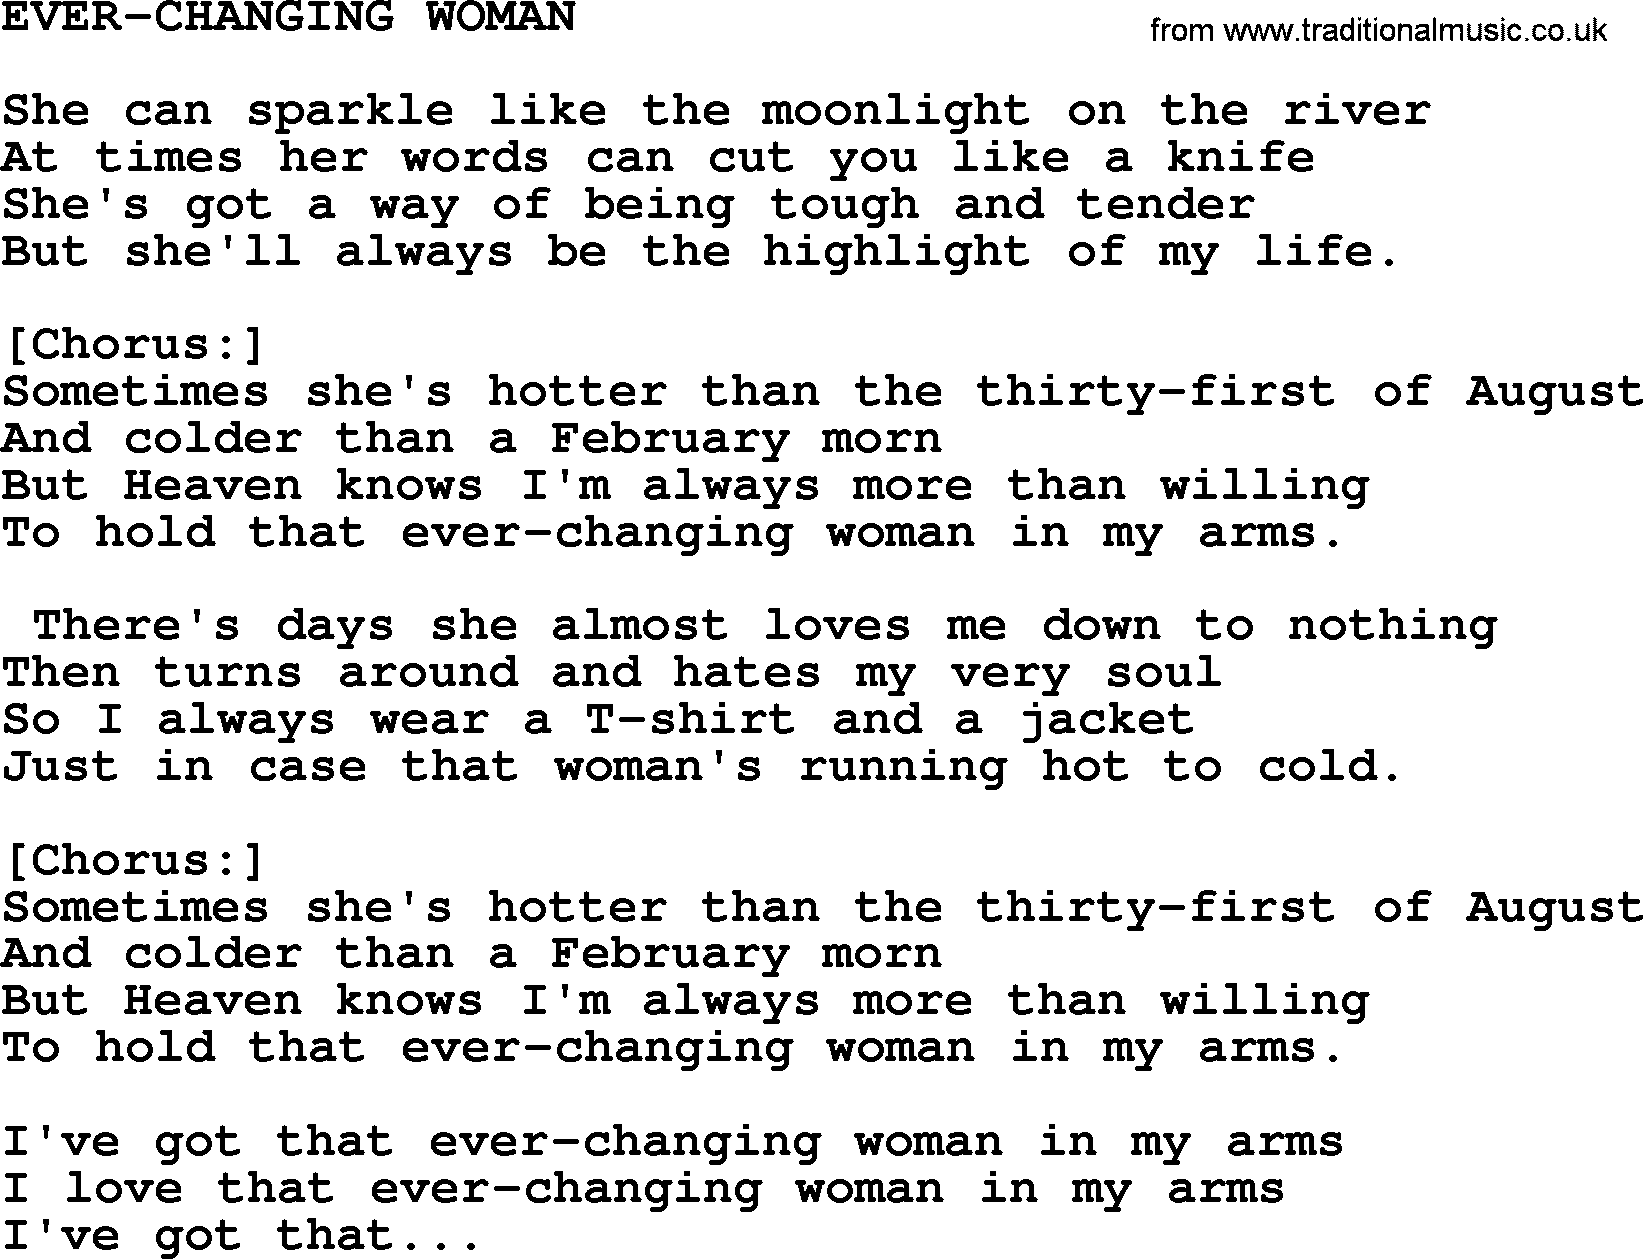 Merle Haggard song: Ever-changing Woman, lyrics.